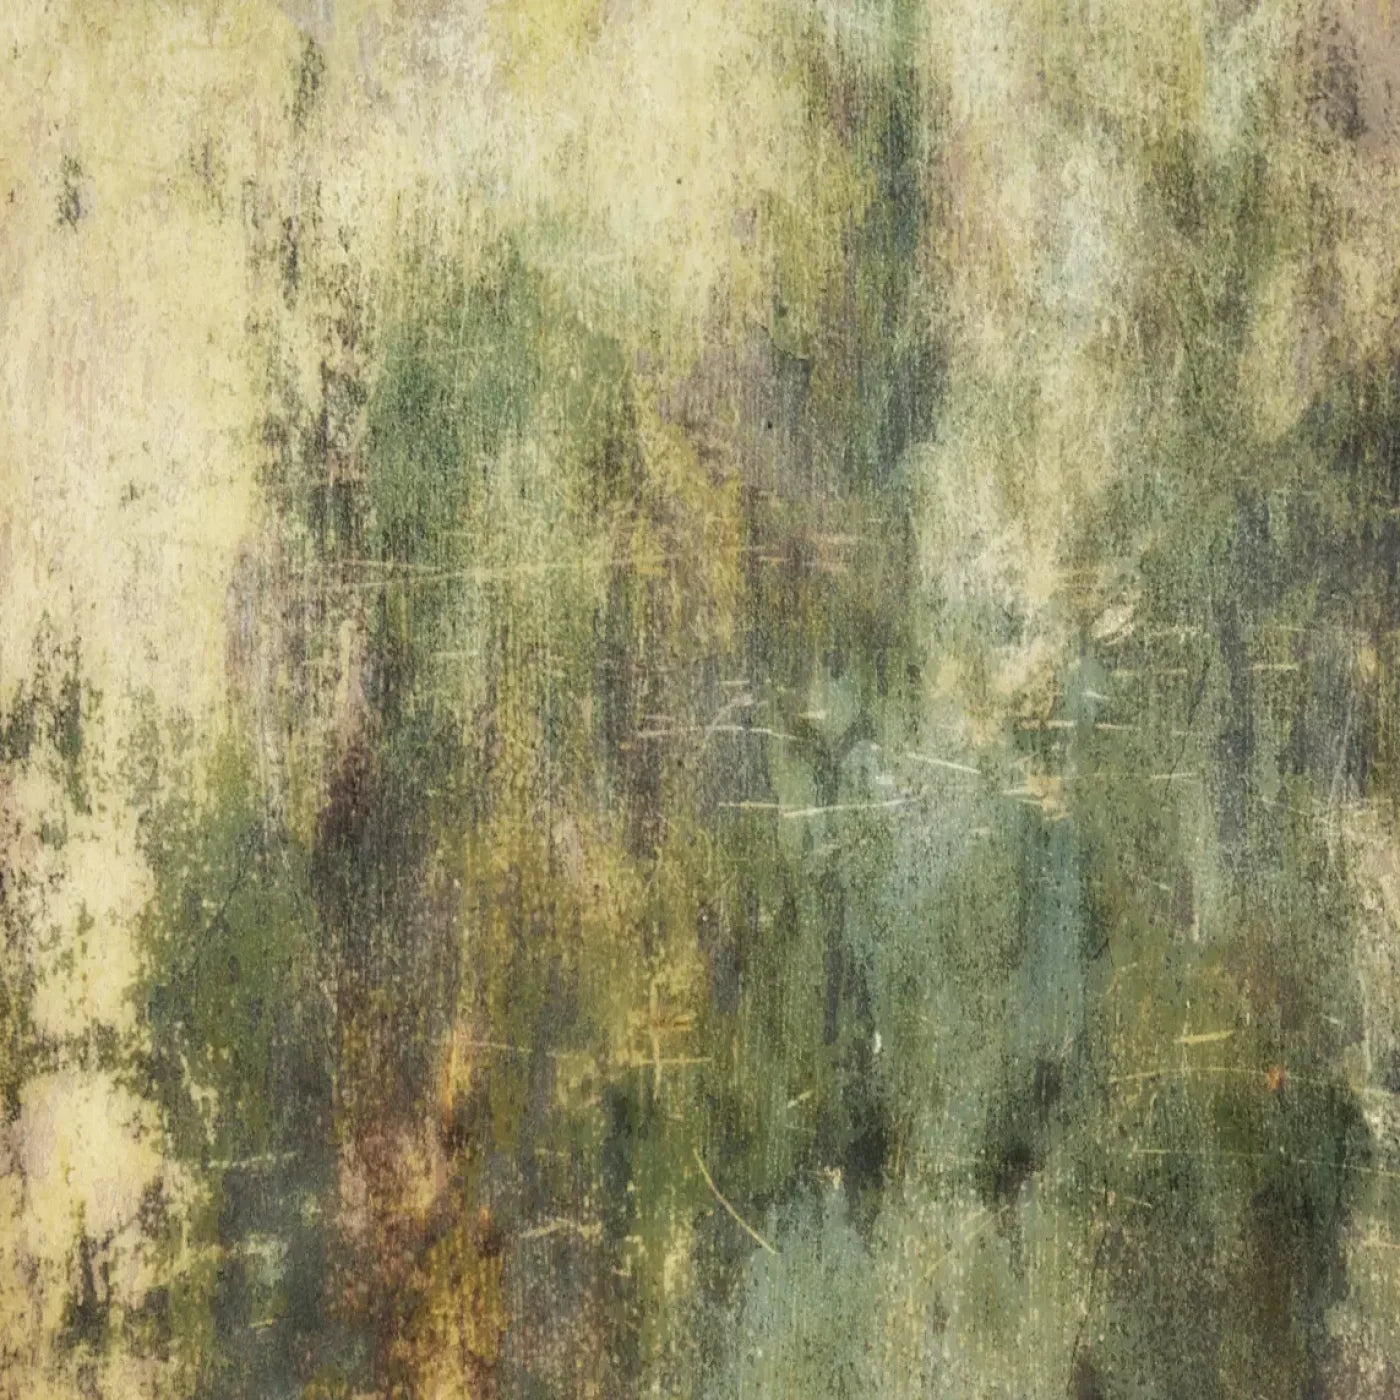 Eucalyptus Grunge Backdrop